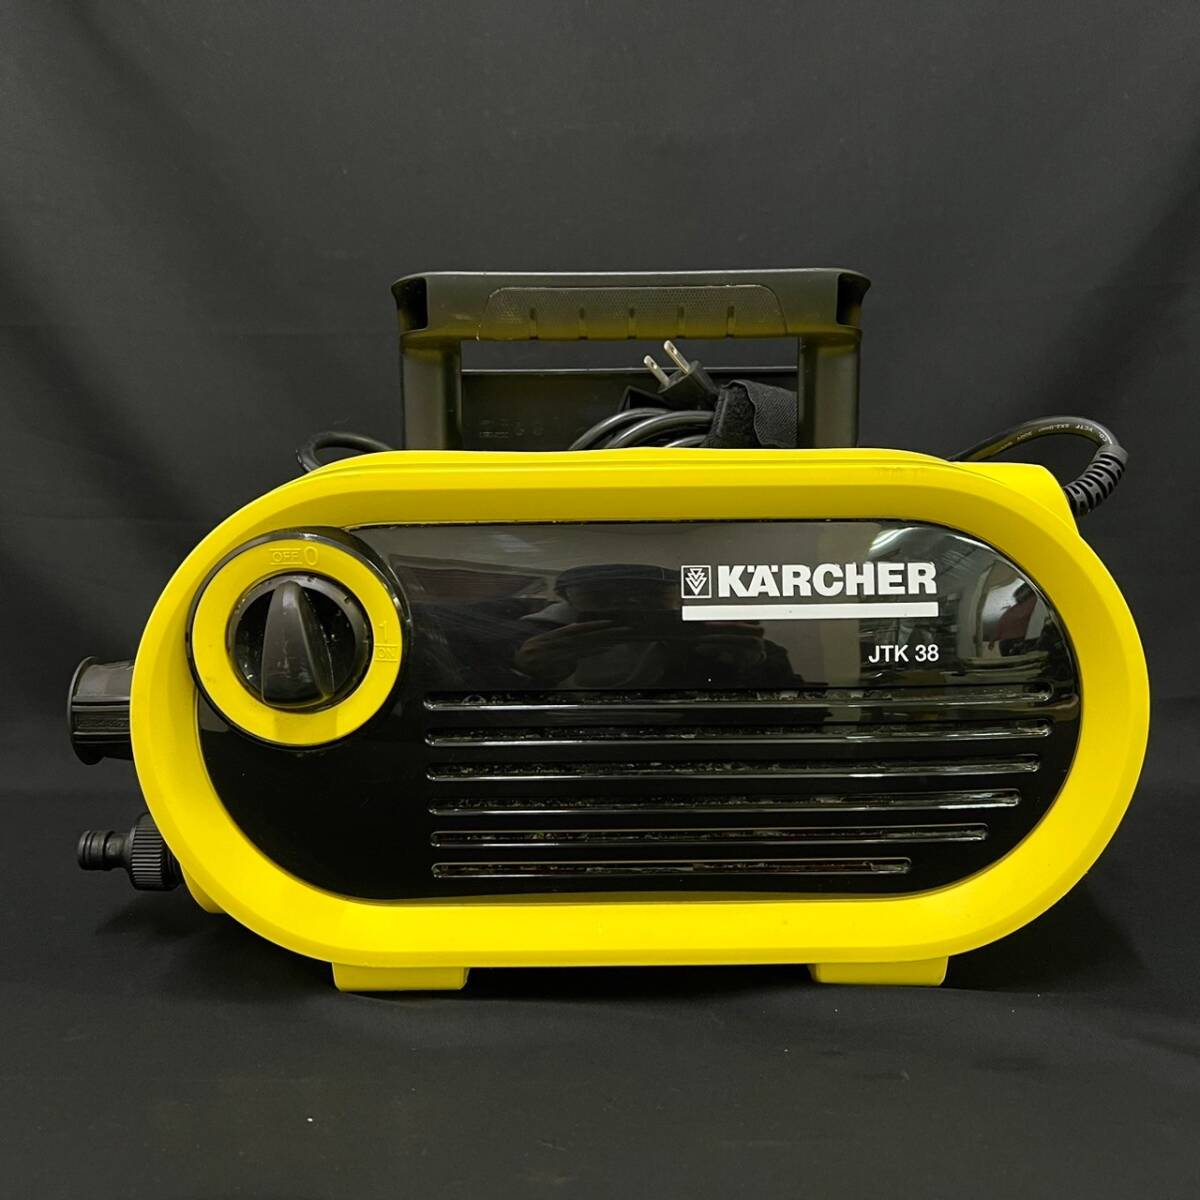 BCg250R KARCHER JTK38 ケルヒャー 家庭用 高圧洗浄機 掃除機 ホース ユニバーサルクリーナー 説明書付き 清掃 の画像2